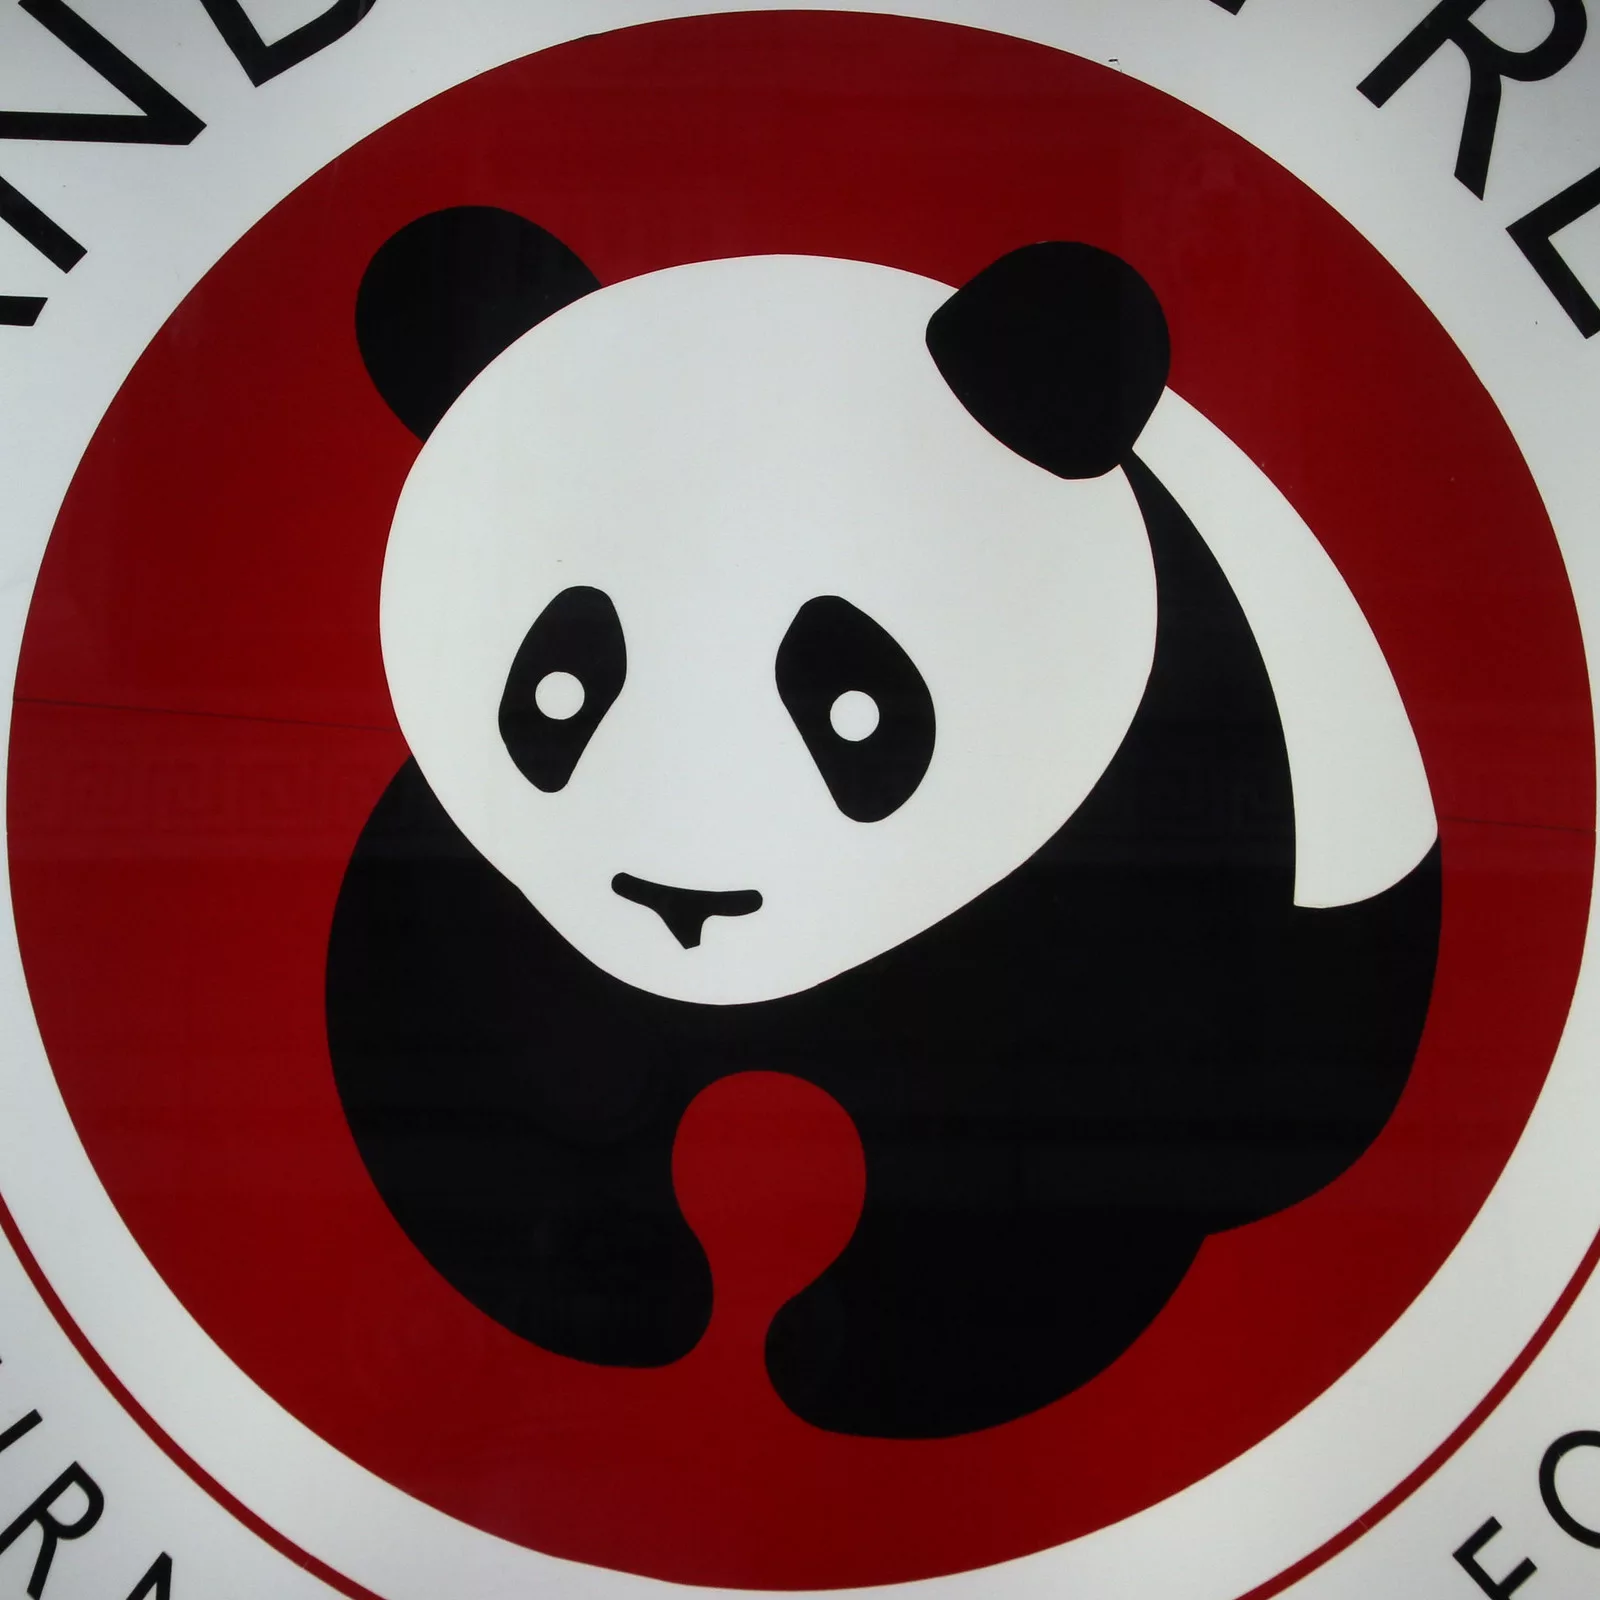 Panda Express gourmet chinese food logo - zoomed in